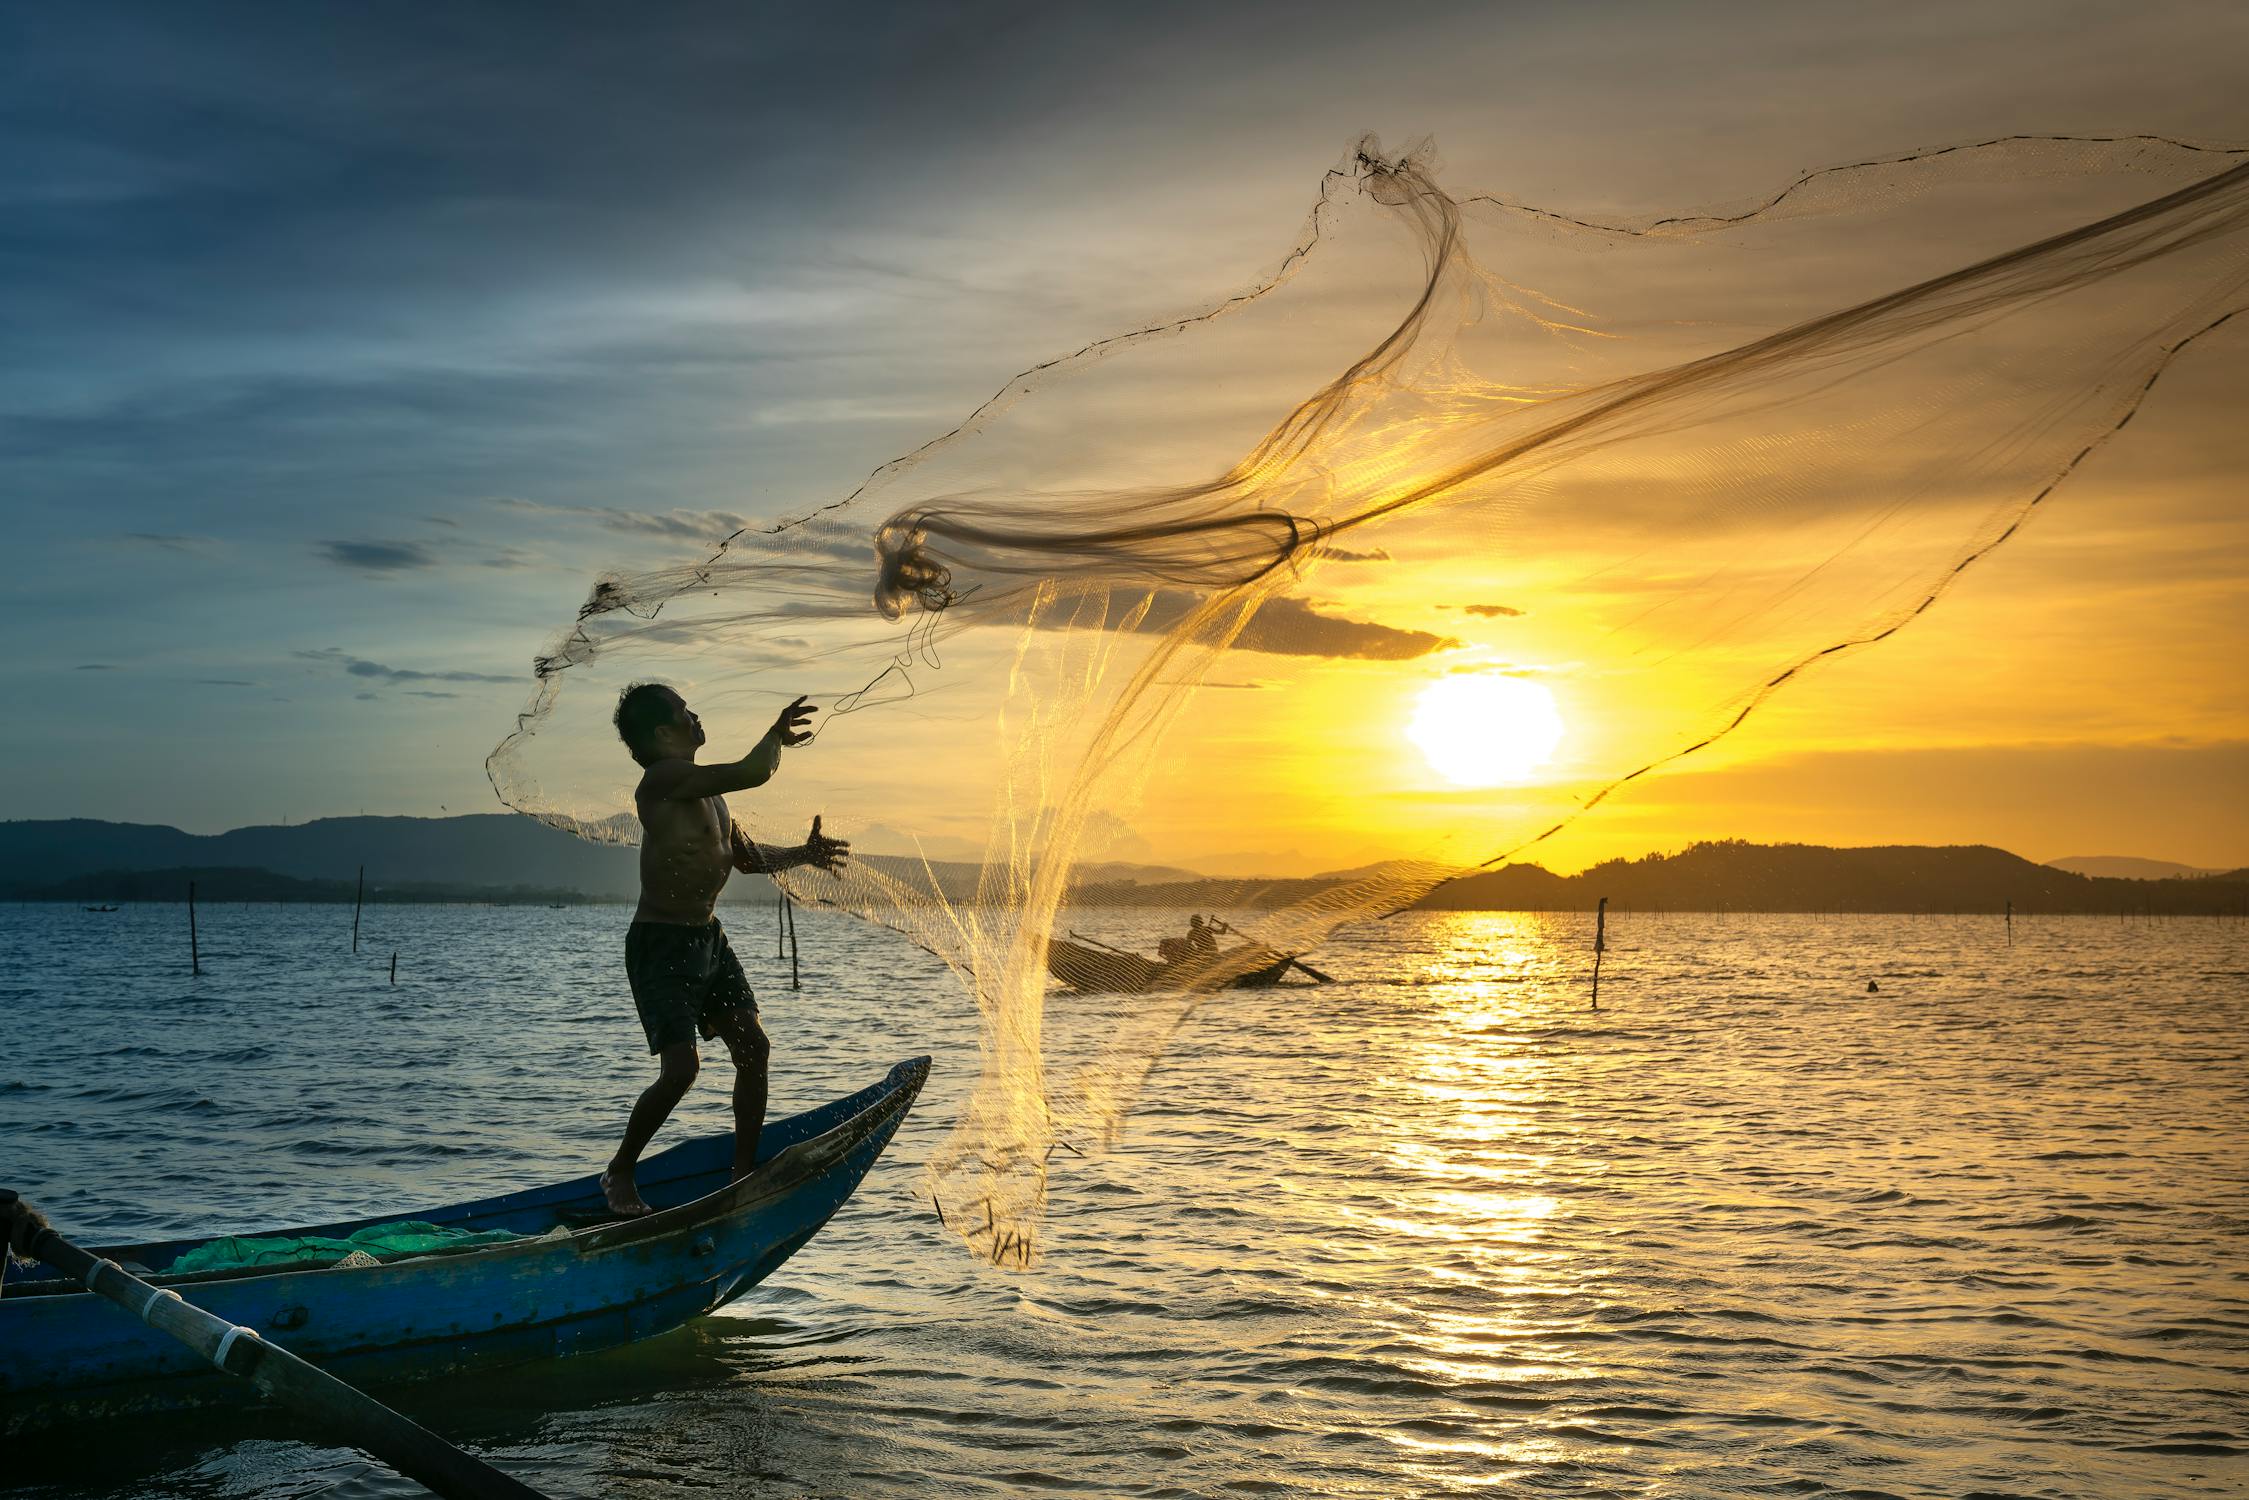 Fisherman Photo by Quang Nguyen Vinh from Pexels: https://www.pexels.com/photo/fisherman-throwing-fish-net-on-lake-2131967/